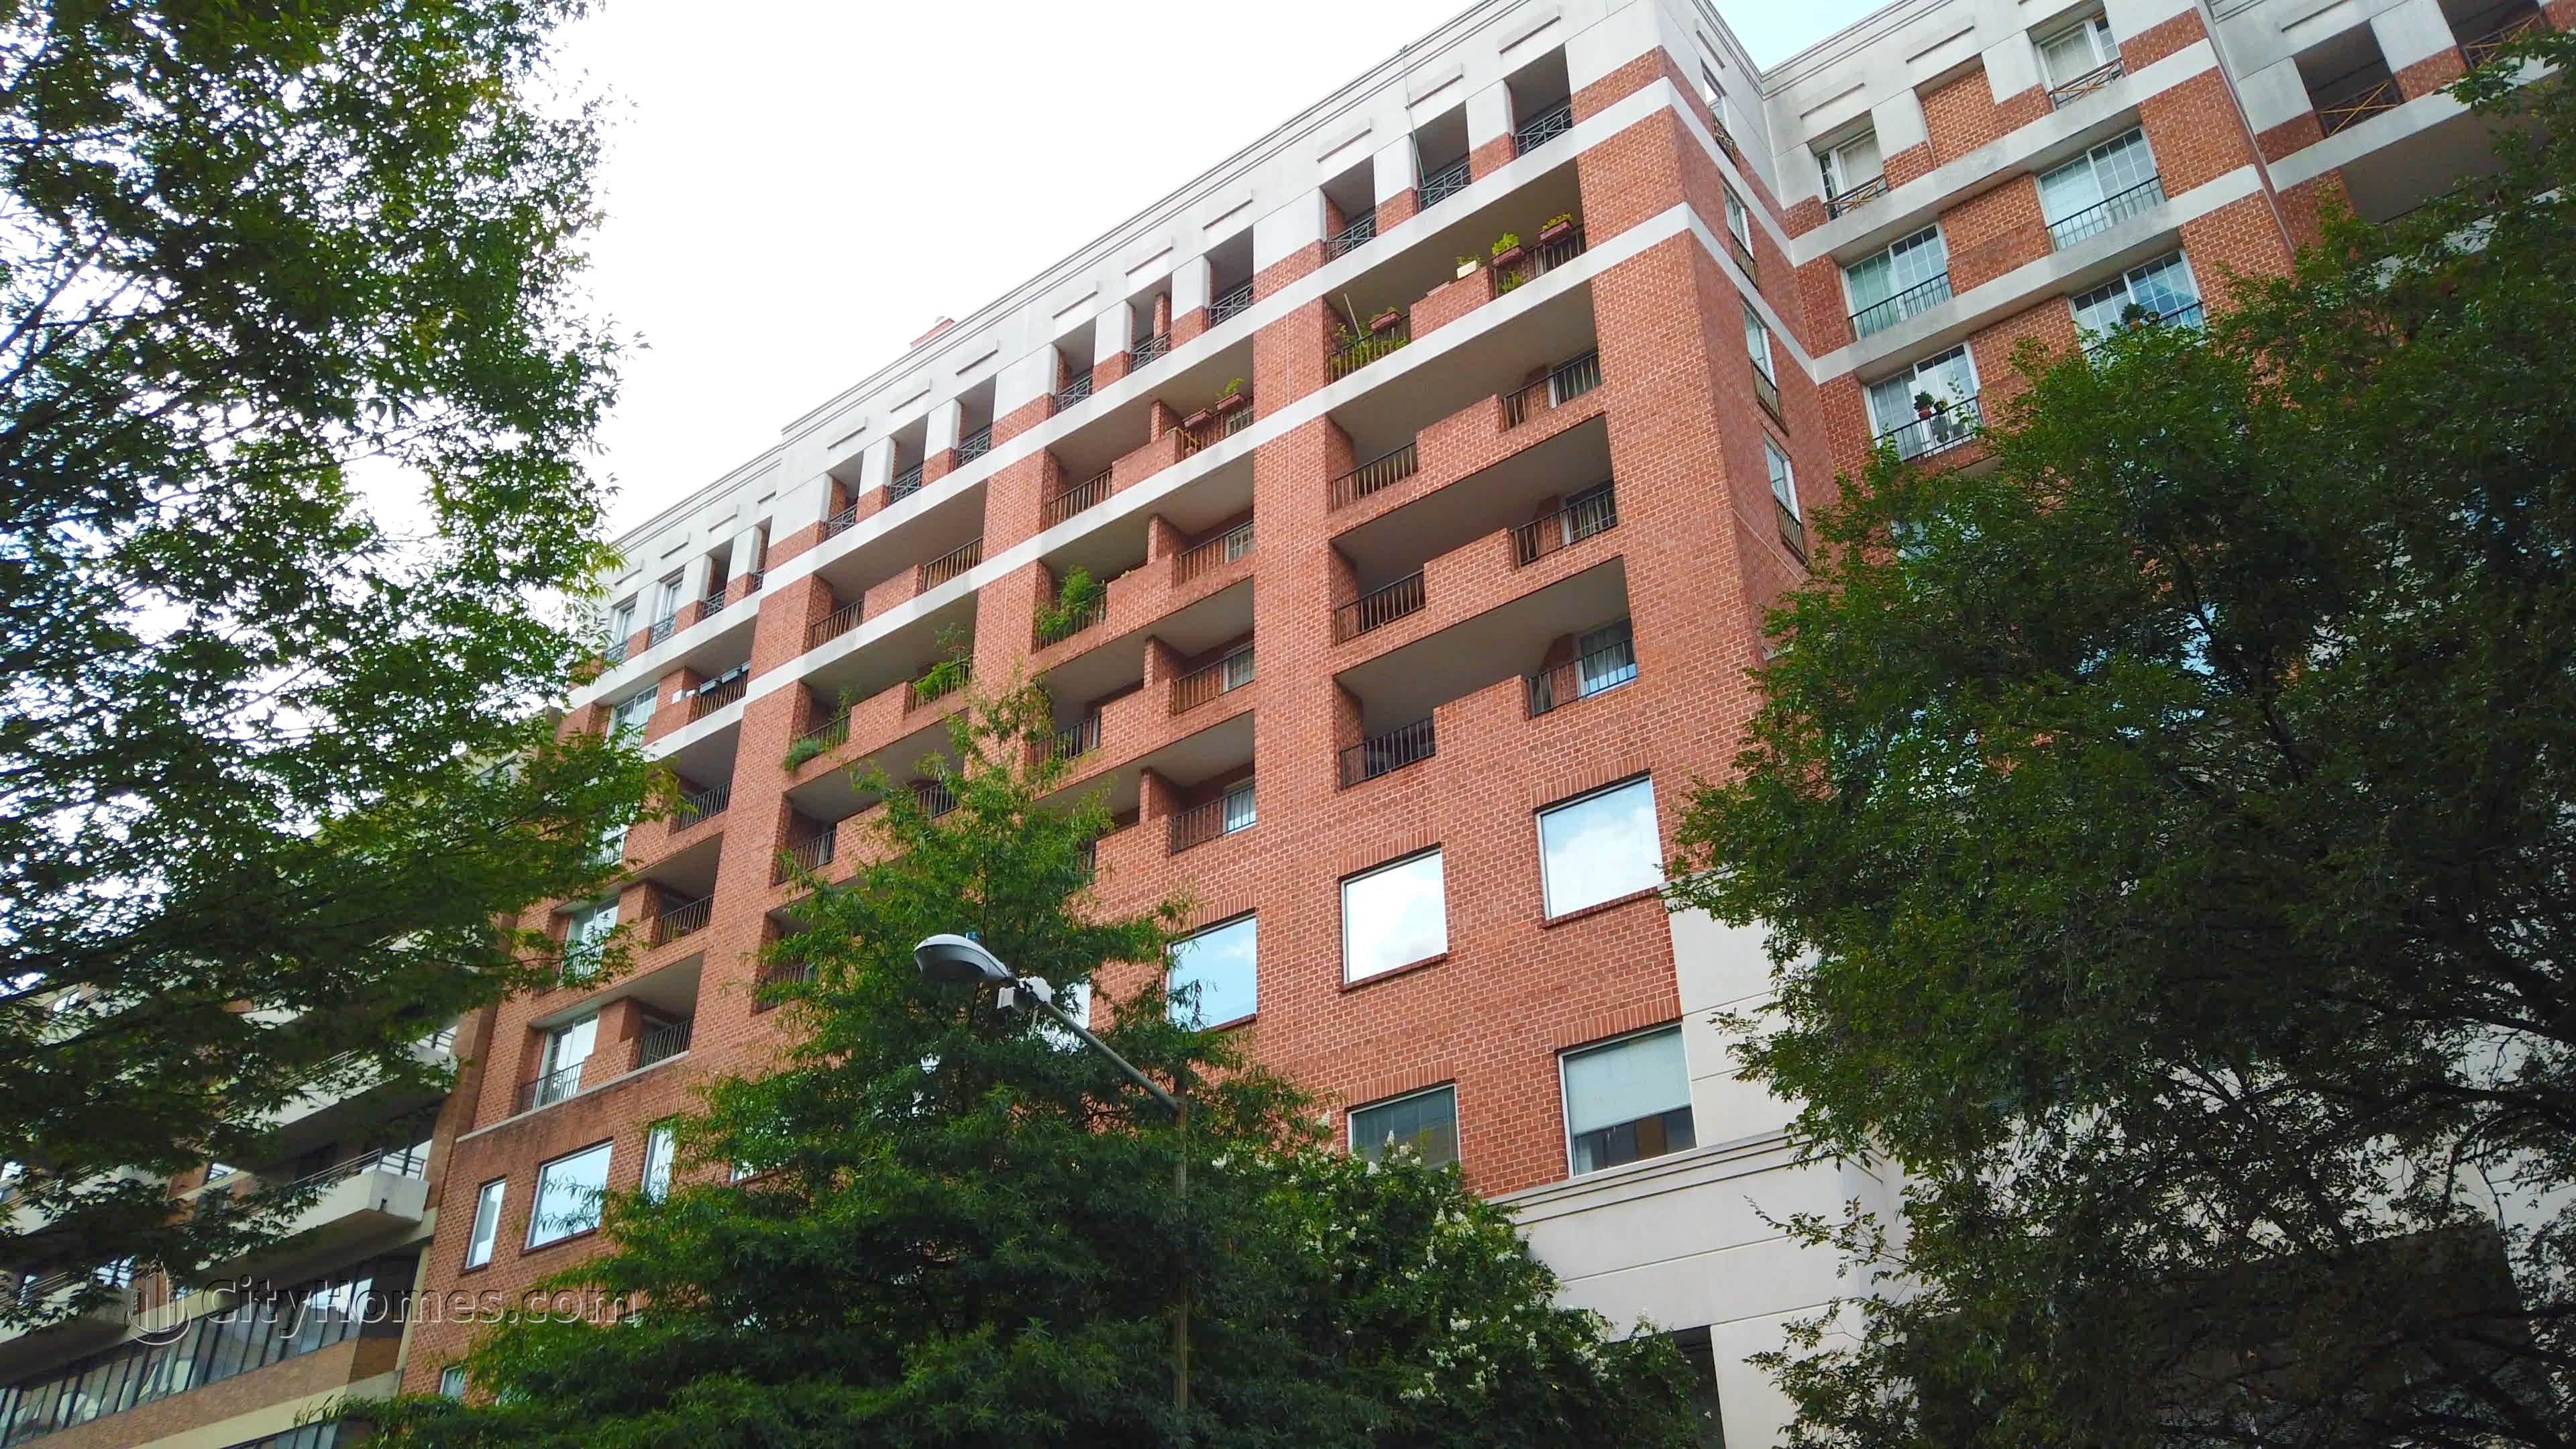 7. Metropolitan Condos building at 1230 23rd St NW, West End, Washington, DC 20037